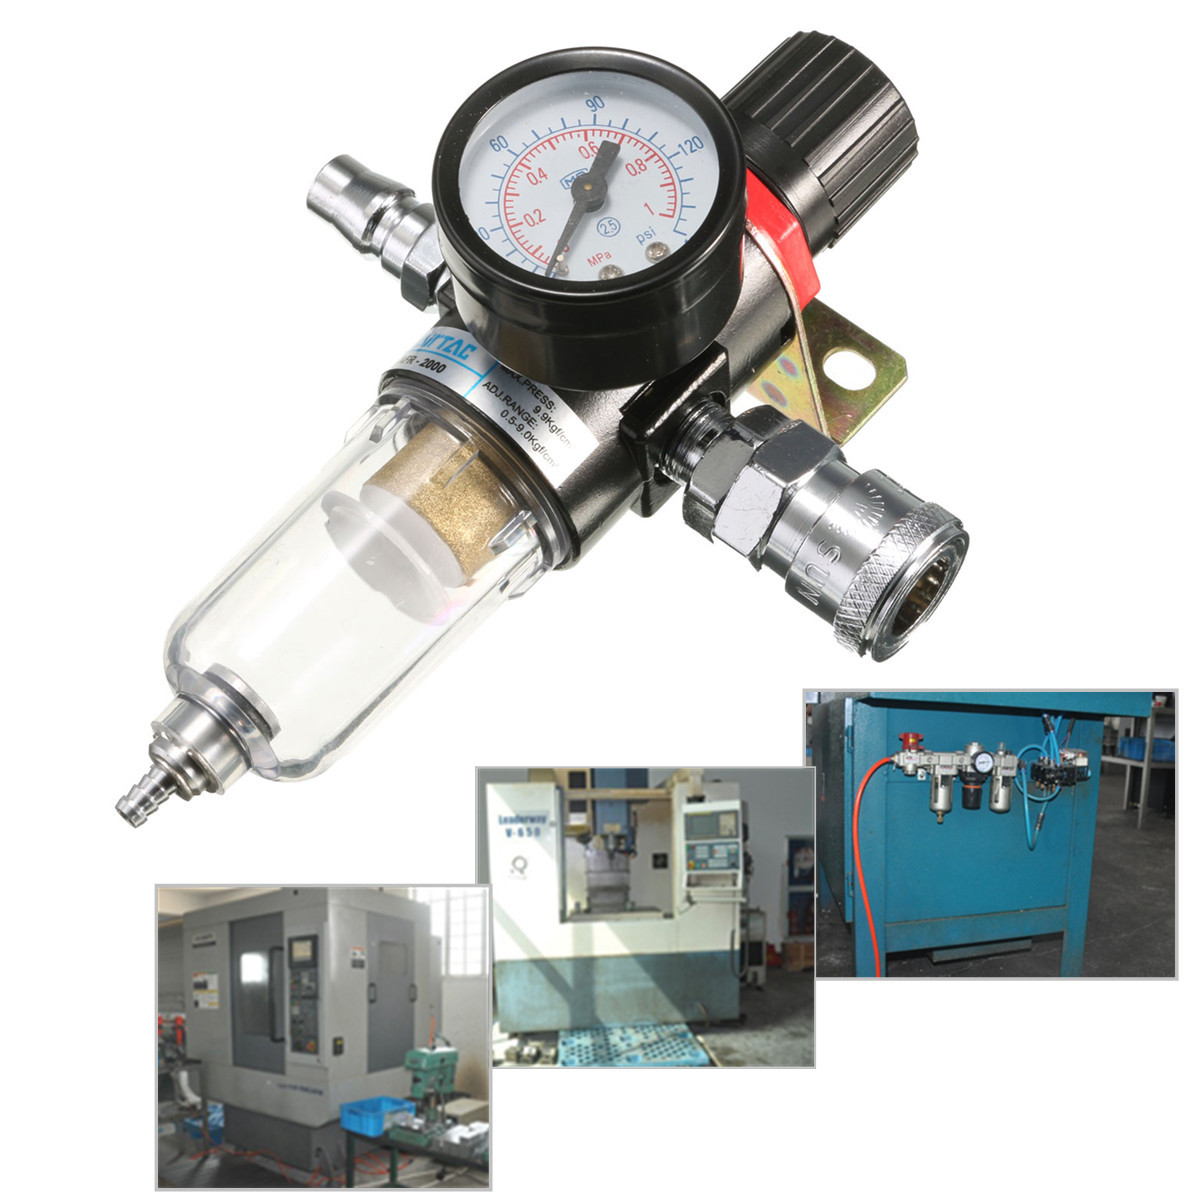 AFR-2000-14quot-Air-Compressor-Filter-Water-Separator-Trap-Tools-Kit-Regulator-Gauge-1043338-3